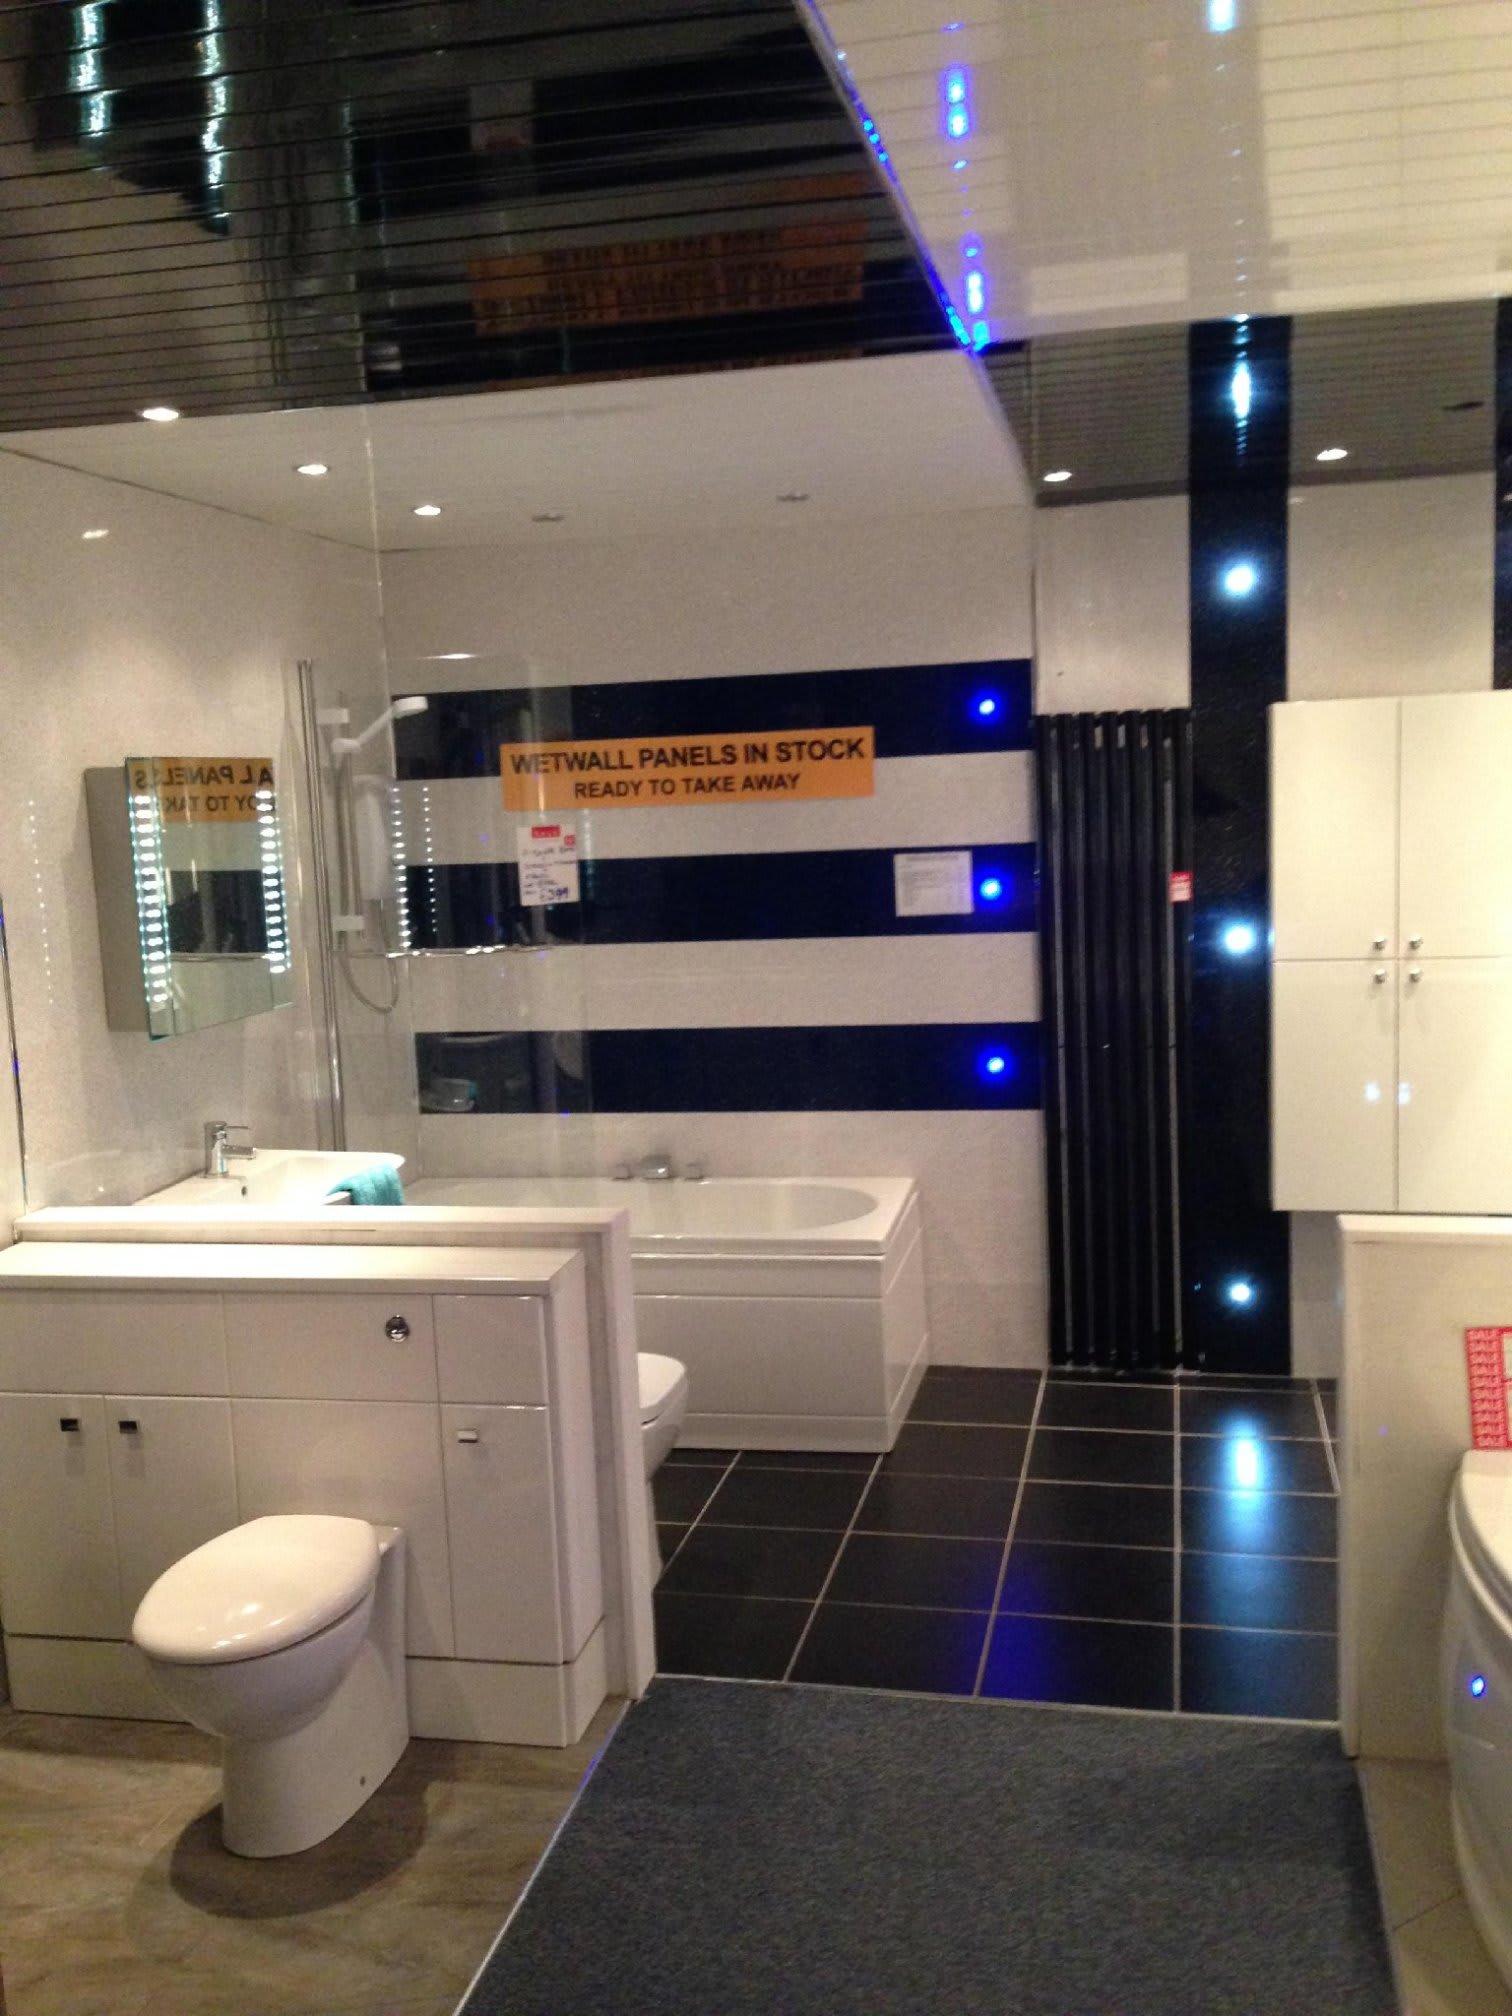 Images Bathroom & Tile City (Glasgow)